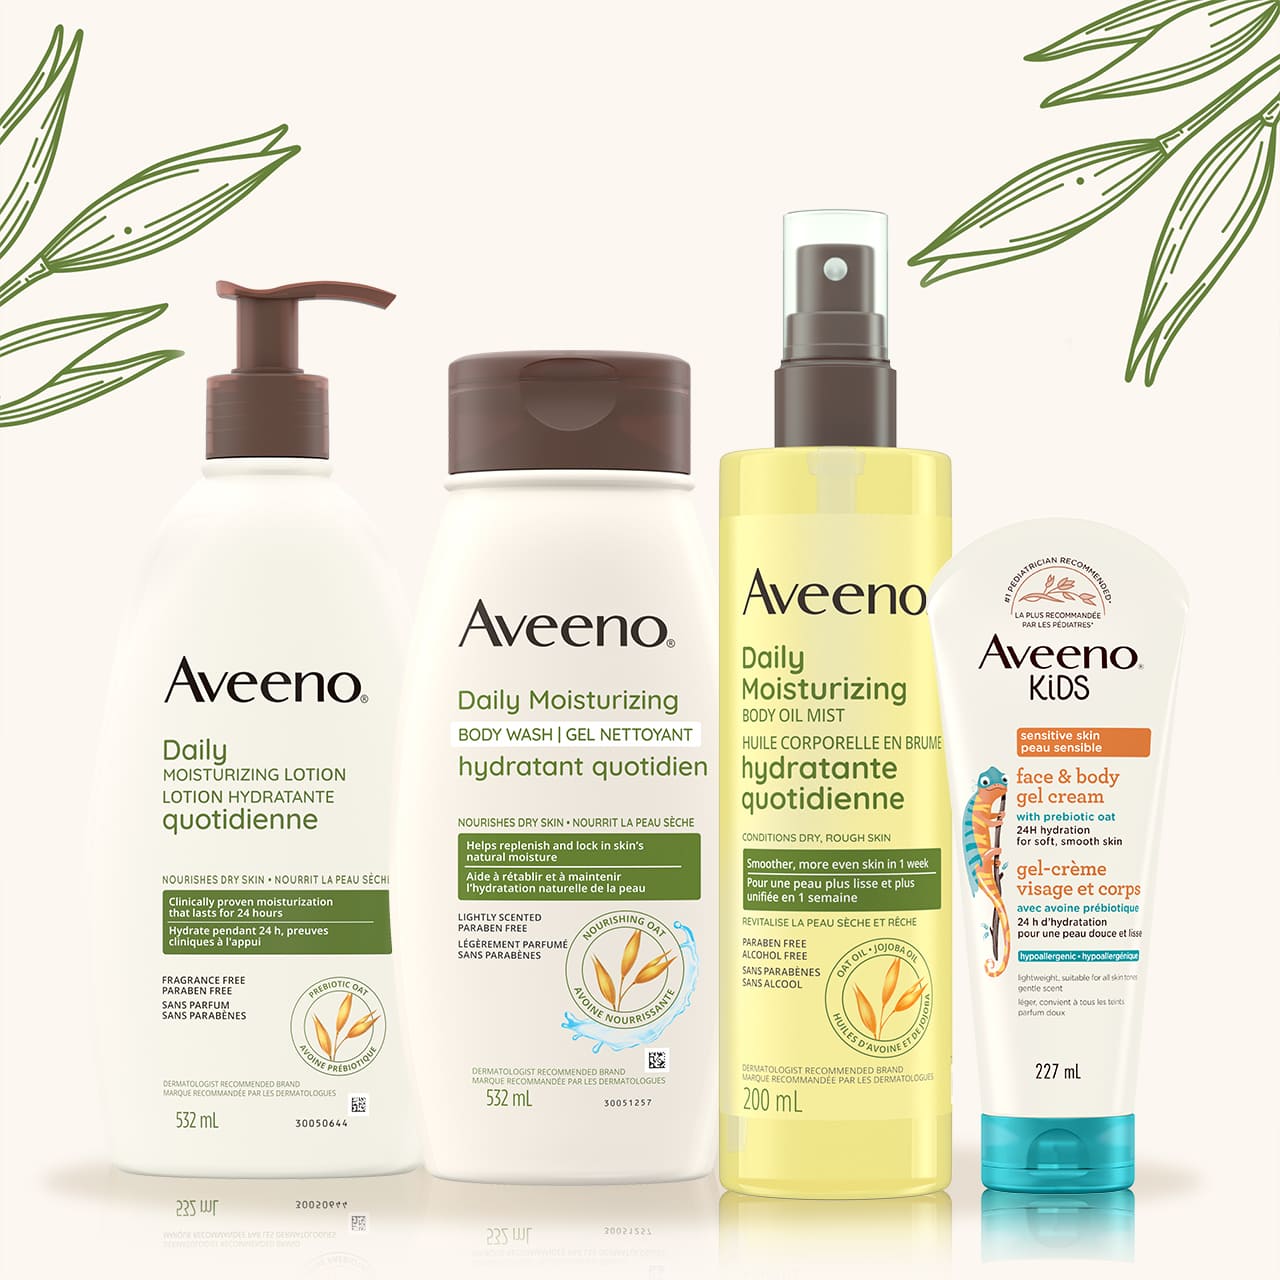 Assortment of three Aveeno Daily Moisturizing products and the Aveeno Kids Face & Body Gel Cream